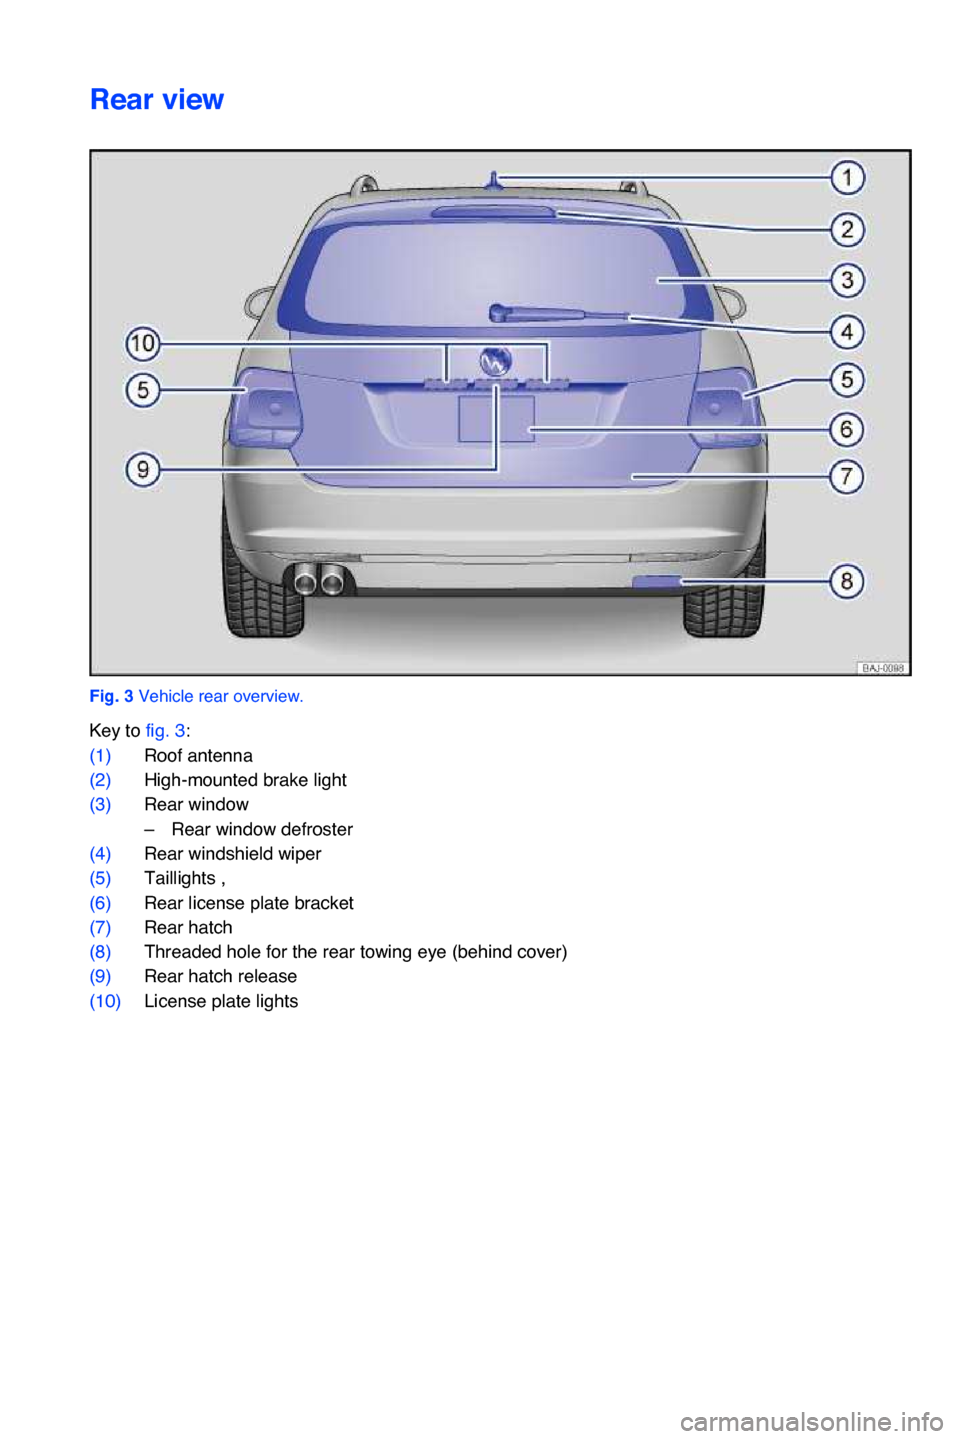 VOLKSWAGEN JETTA SPORTWAGEN 2013 1B / 6.G Owners Manual Rear view
Fig. 3 Vehicle rear overview.
Key to fig. 3:
(1)Roof antenna 
(2)High-mounted brake light 
(3)Rear window
–Rear window defroster 
(4)Rear windshield wiper 
(5)Taillights , 
(6)Rear license